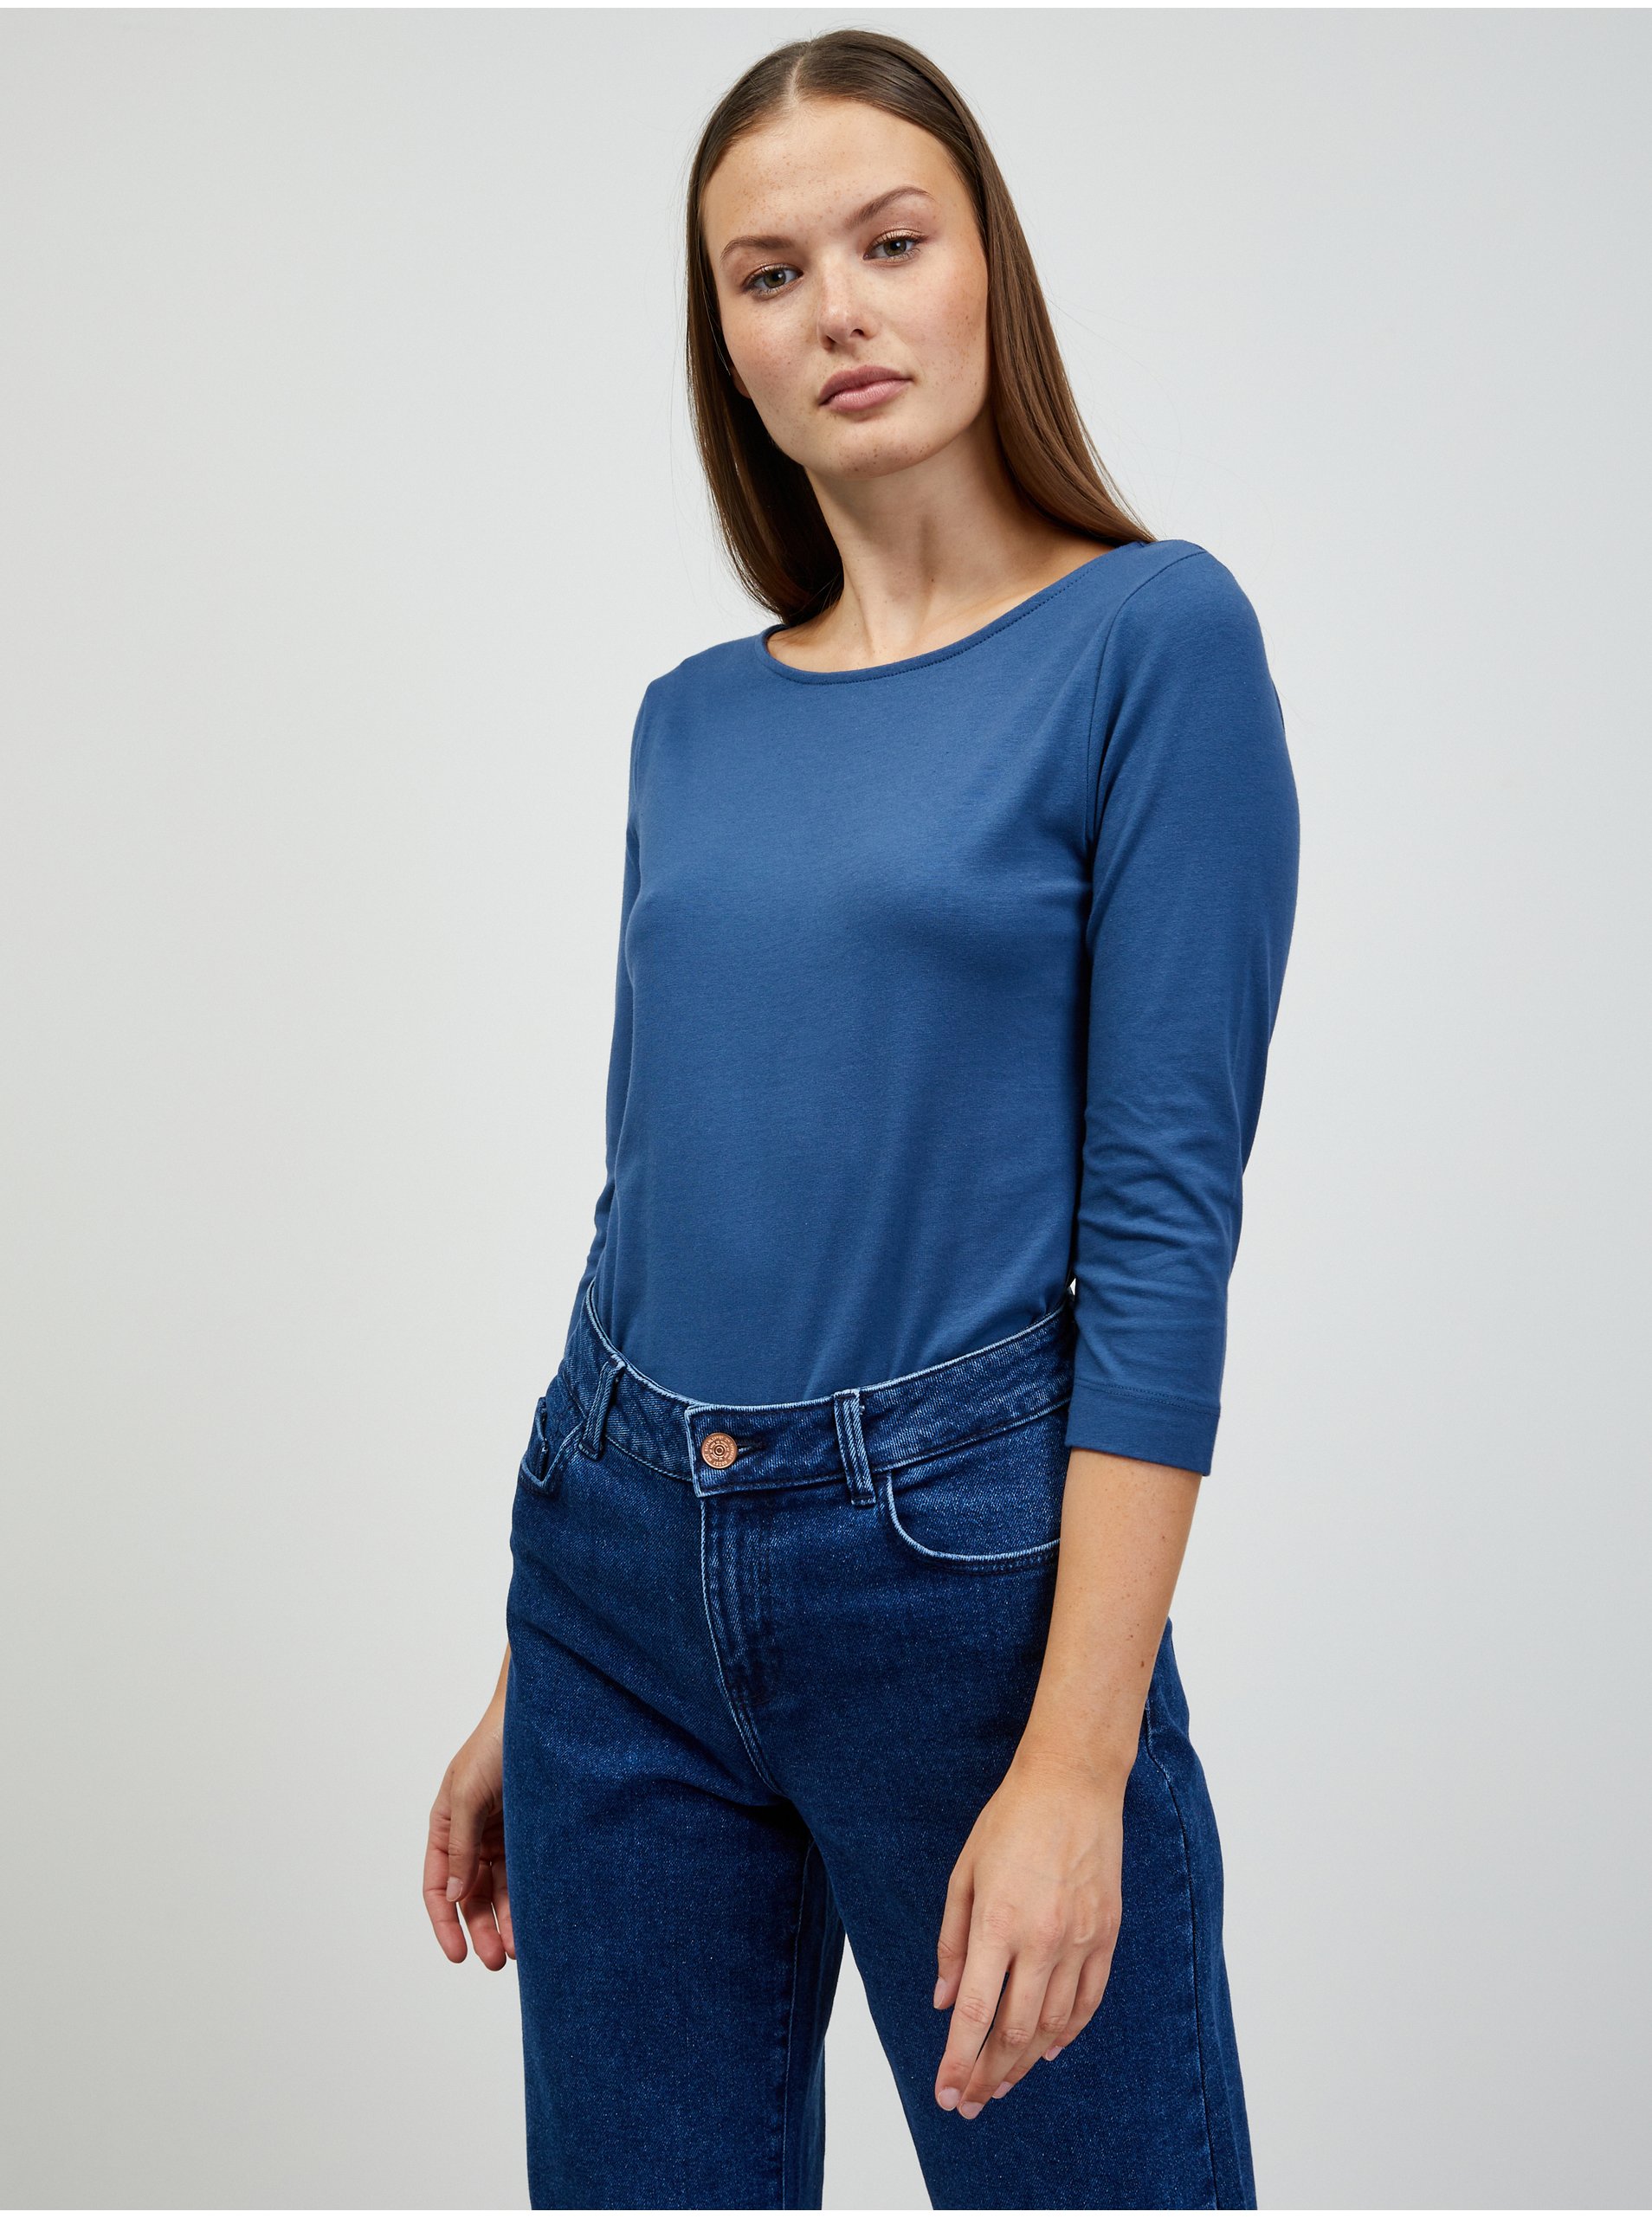 E-shop Modré dámské basic tričko ZOOT.lab Zion